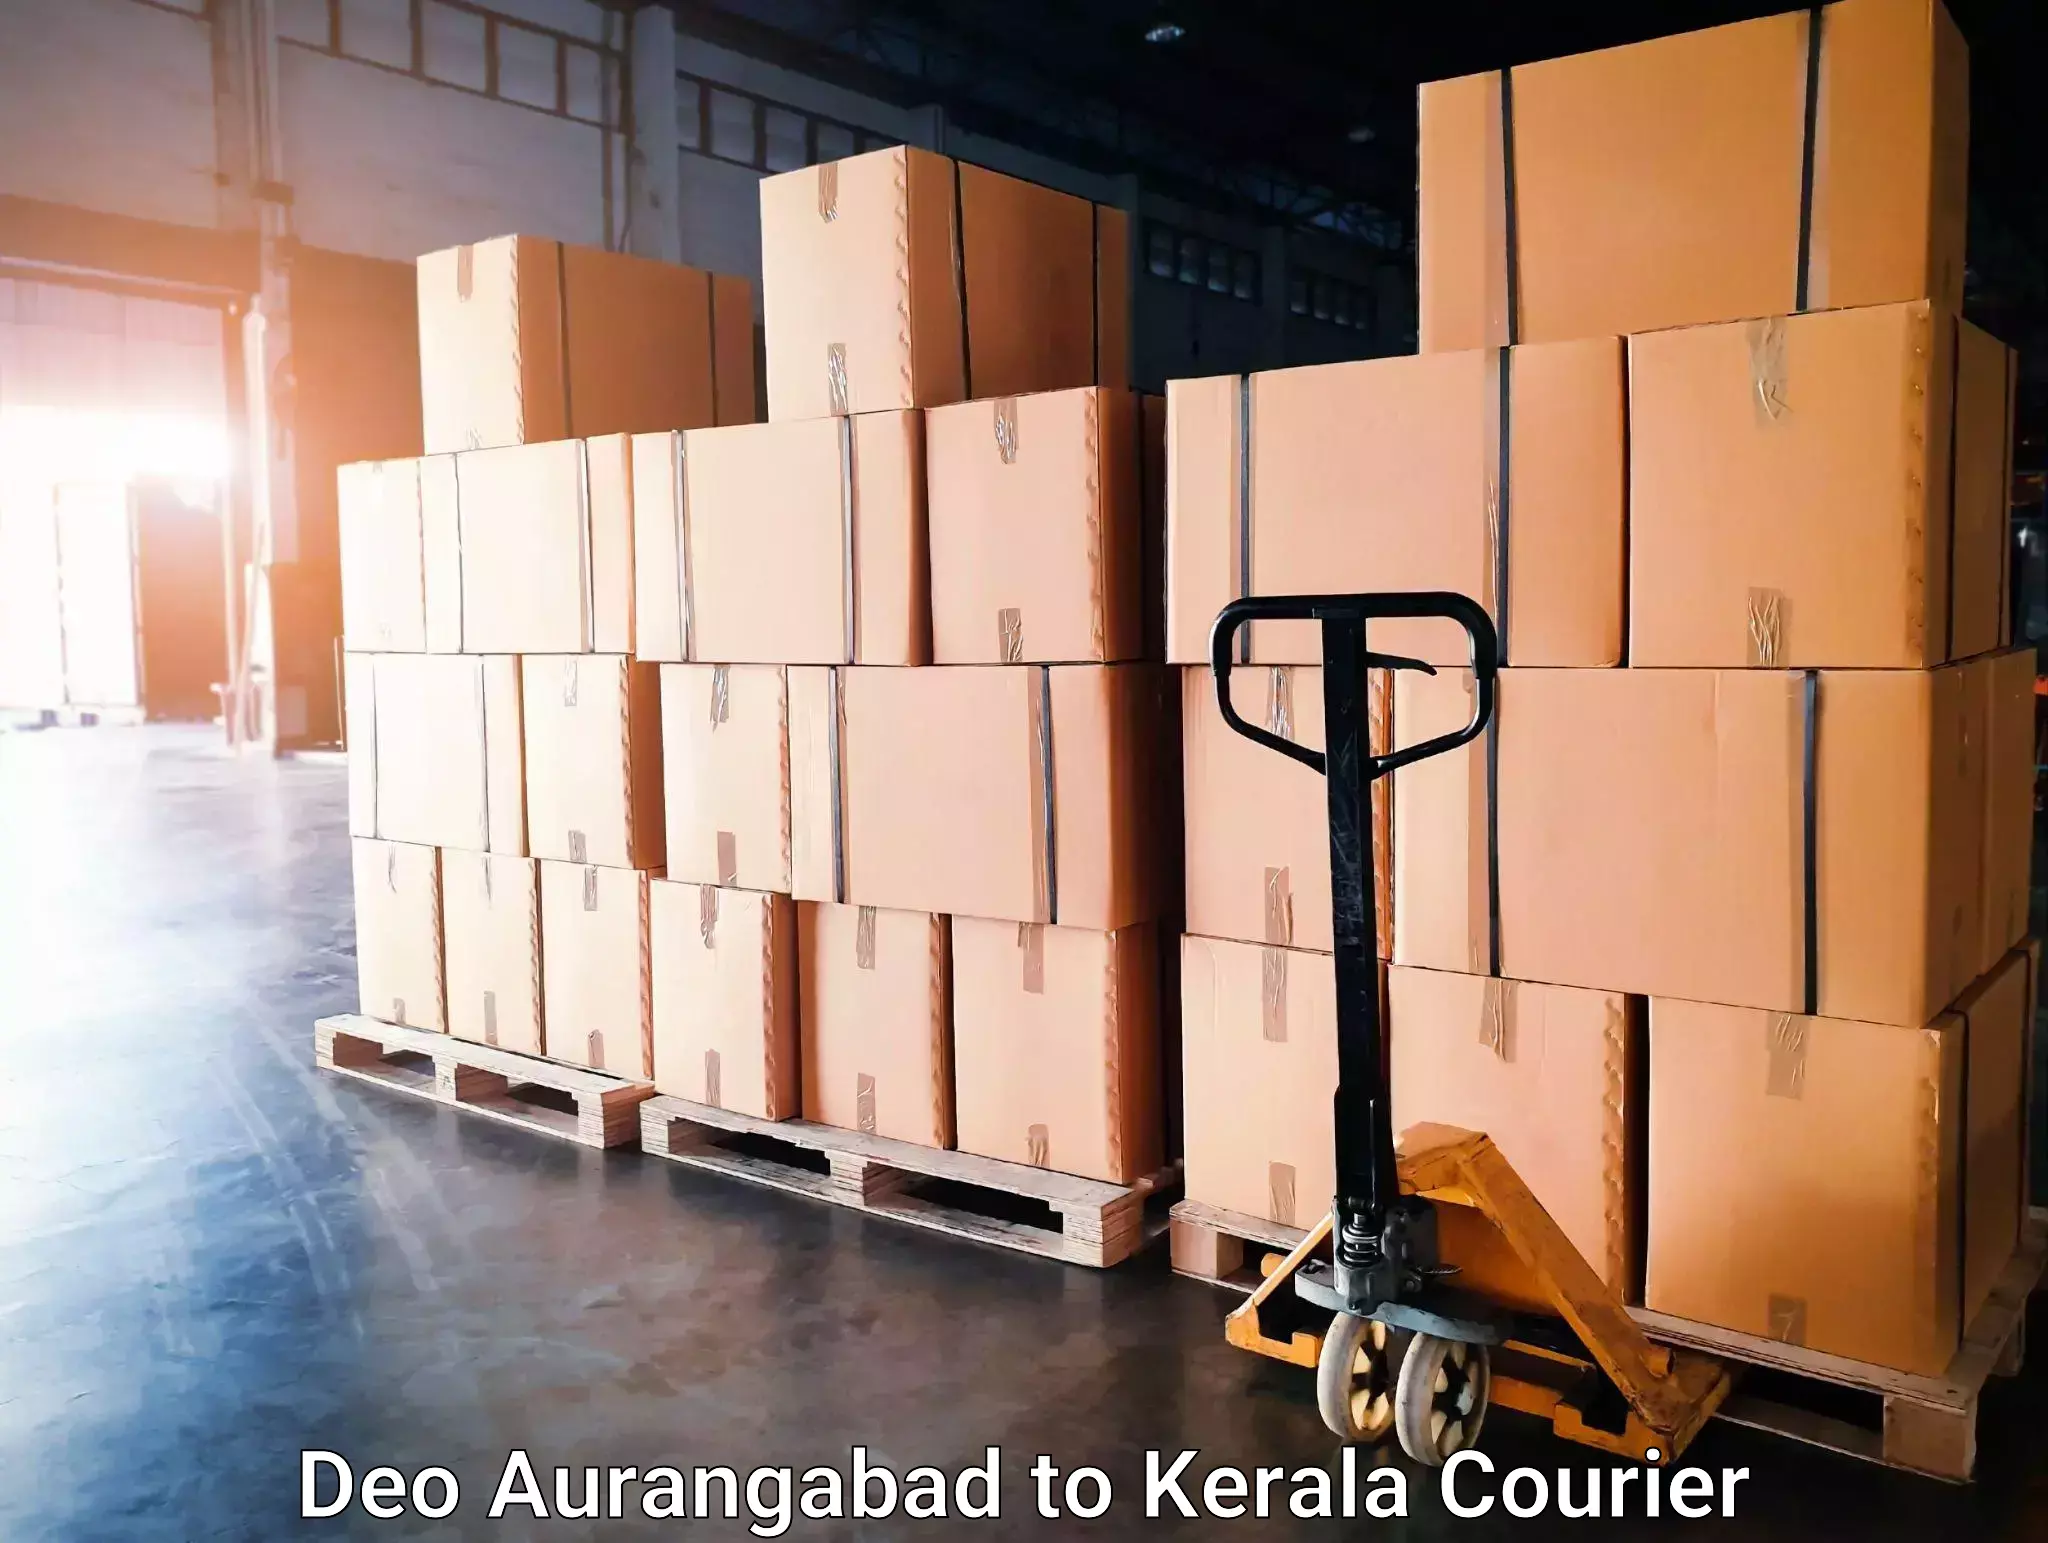 Seamless moving process Deo Aurangabad to Kerala